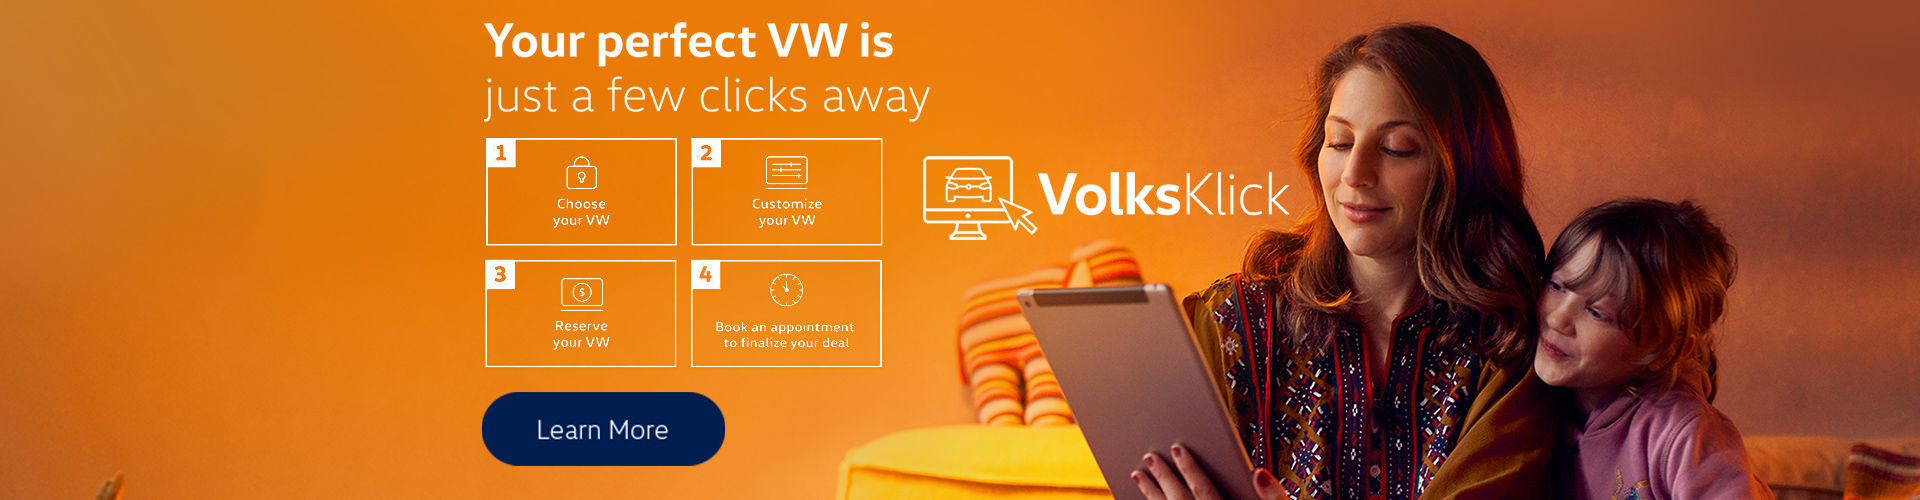 VolksKlick homepage